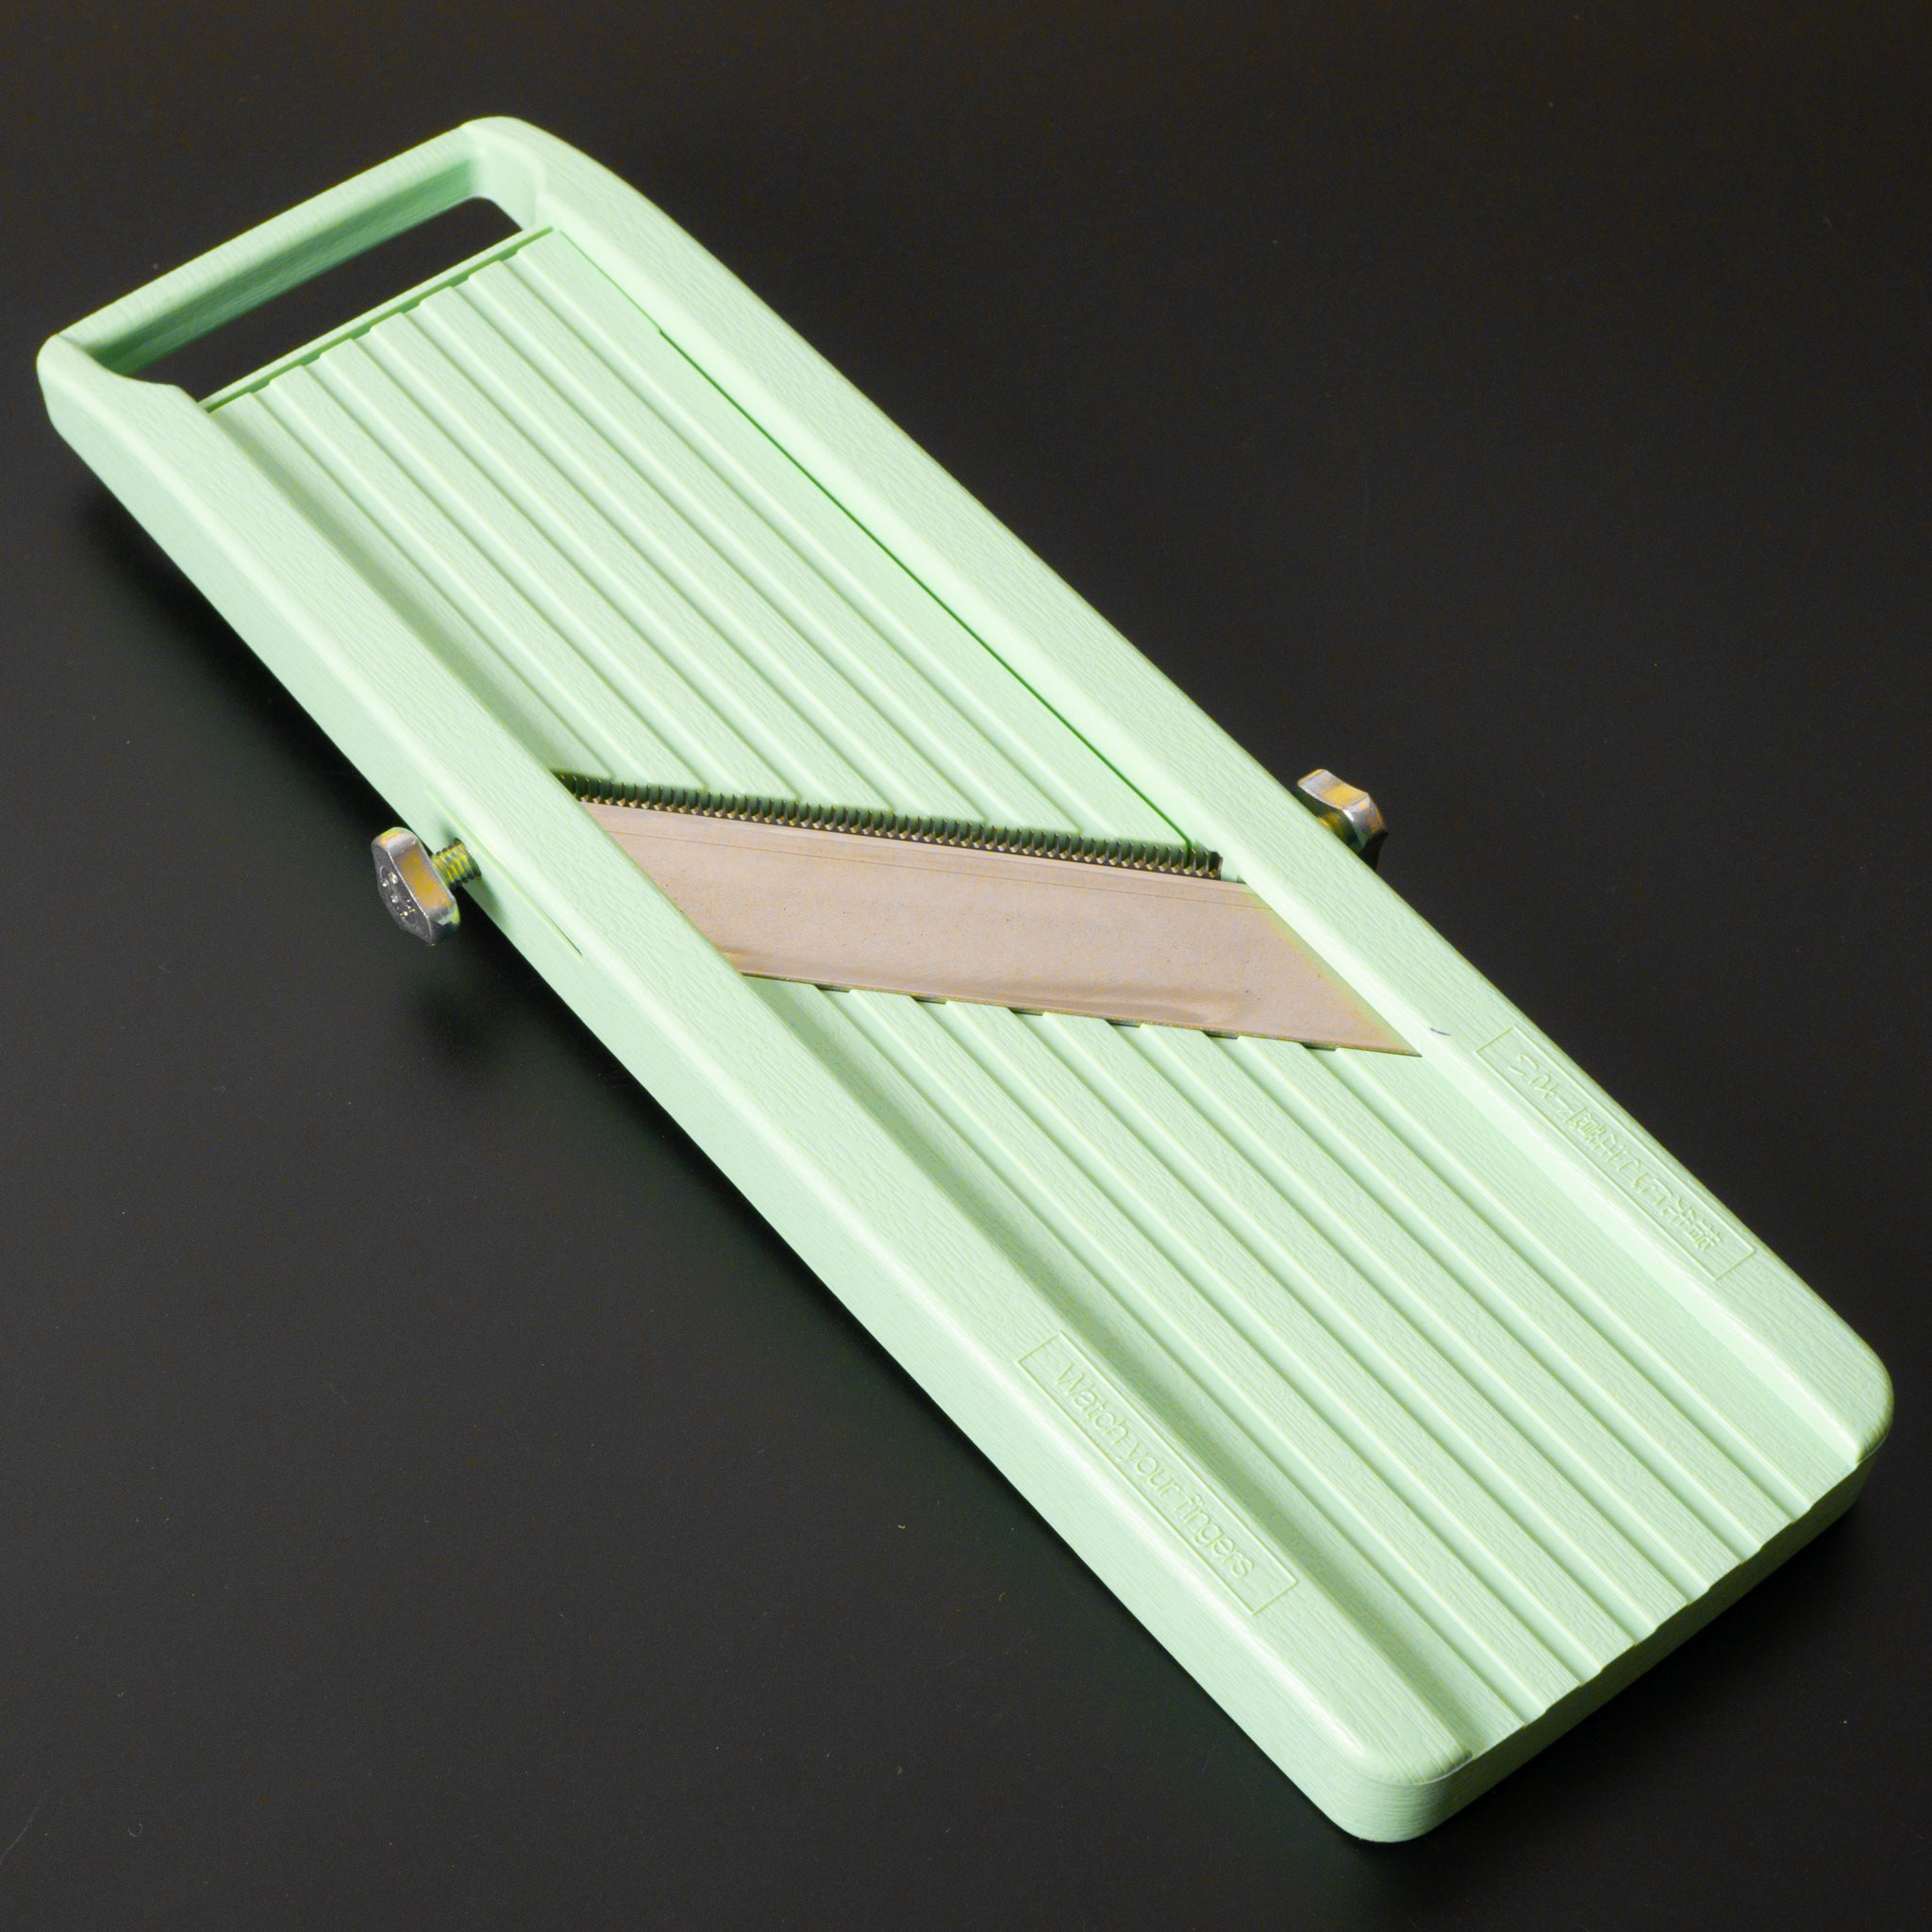 Benriner Mandolin Slicer 64mm (Green)